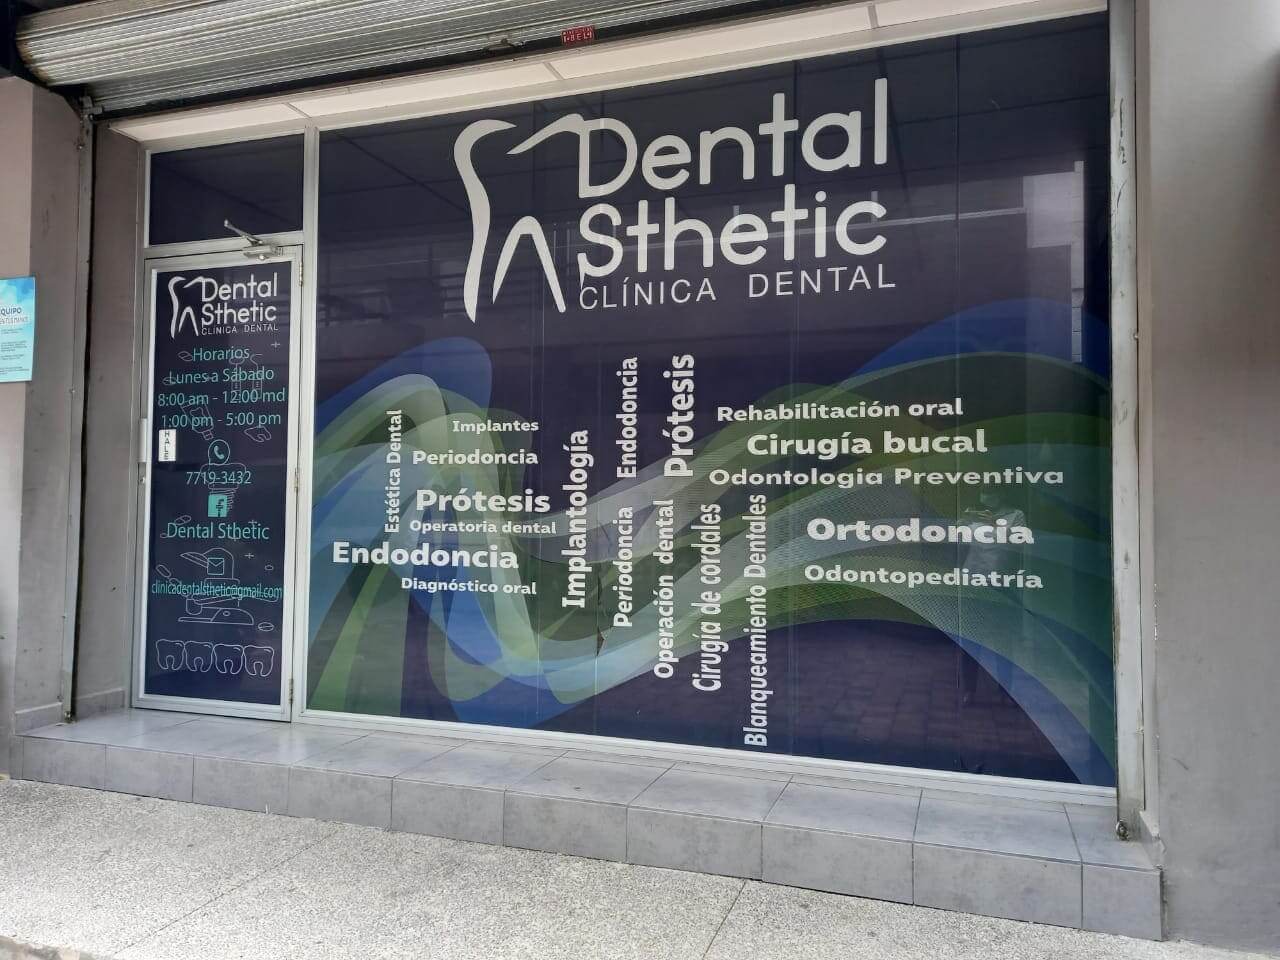 dental-esthetic-plaza-kristal-001